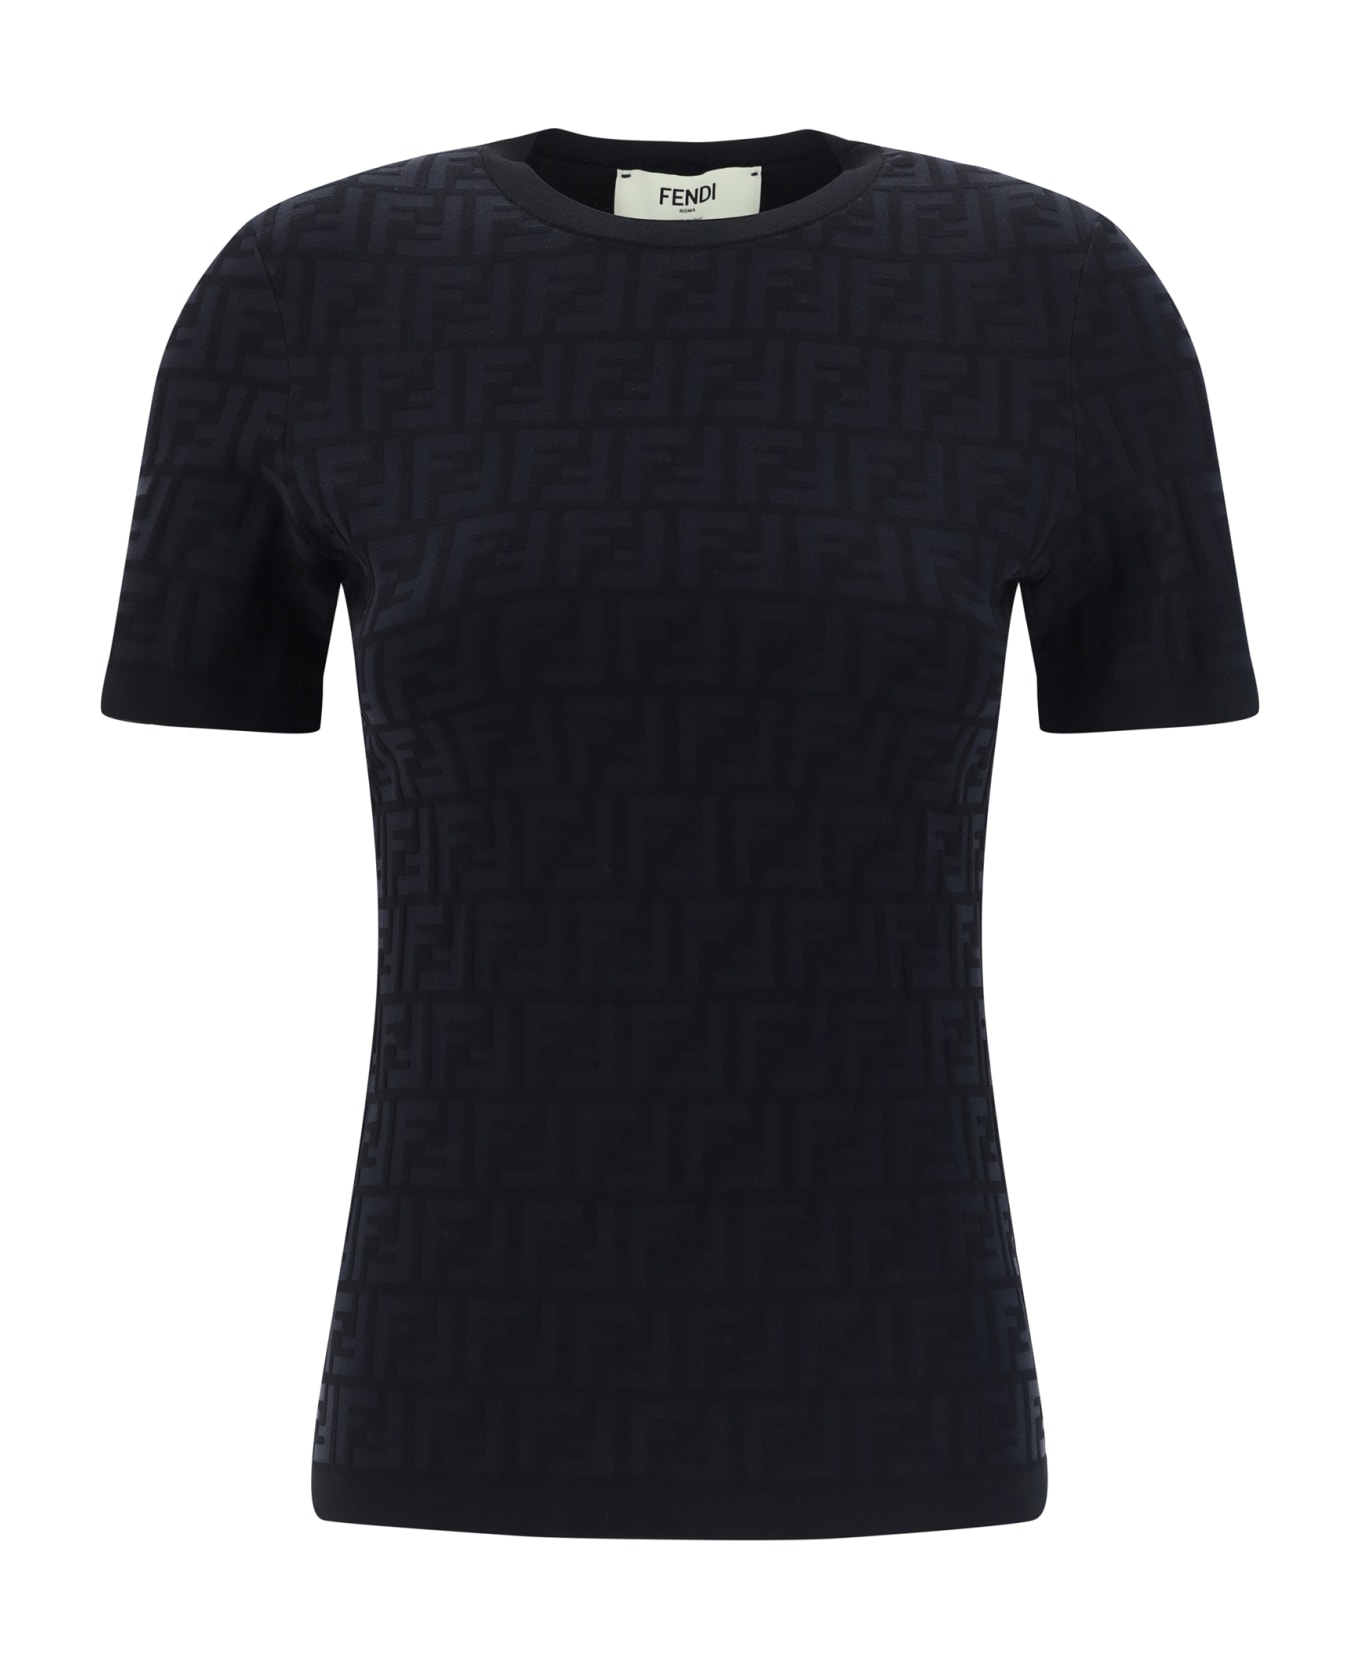 Fendi T-shirt - Gme Black